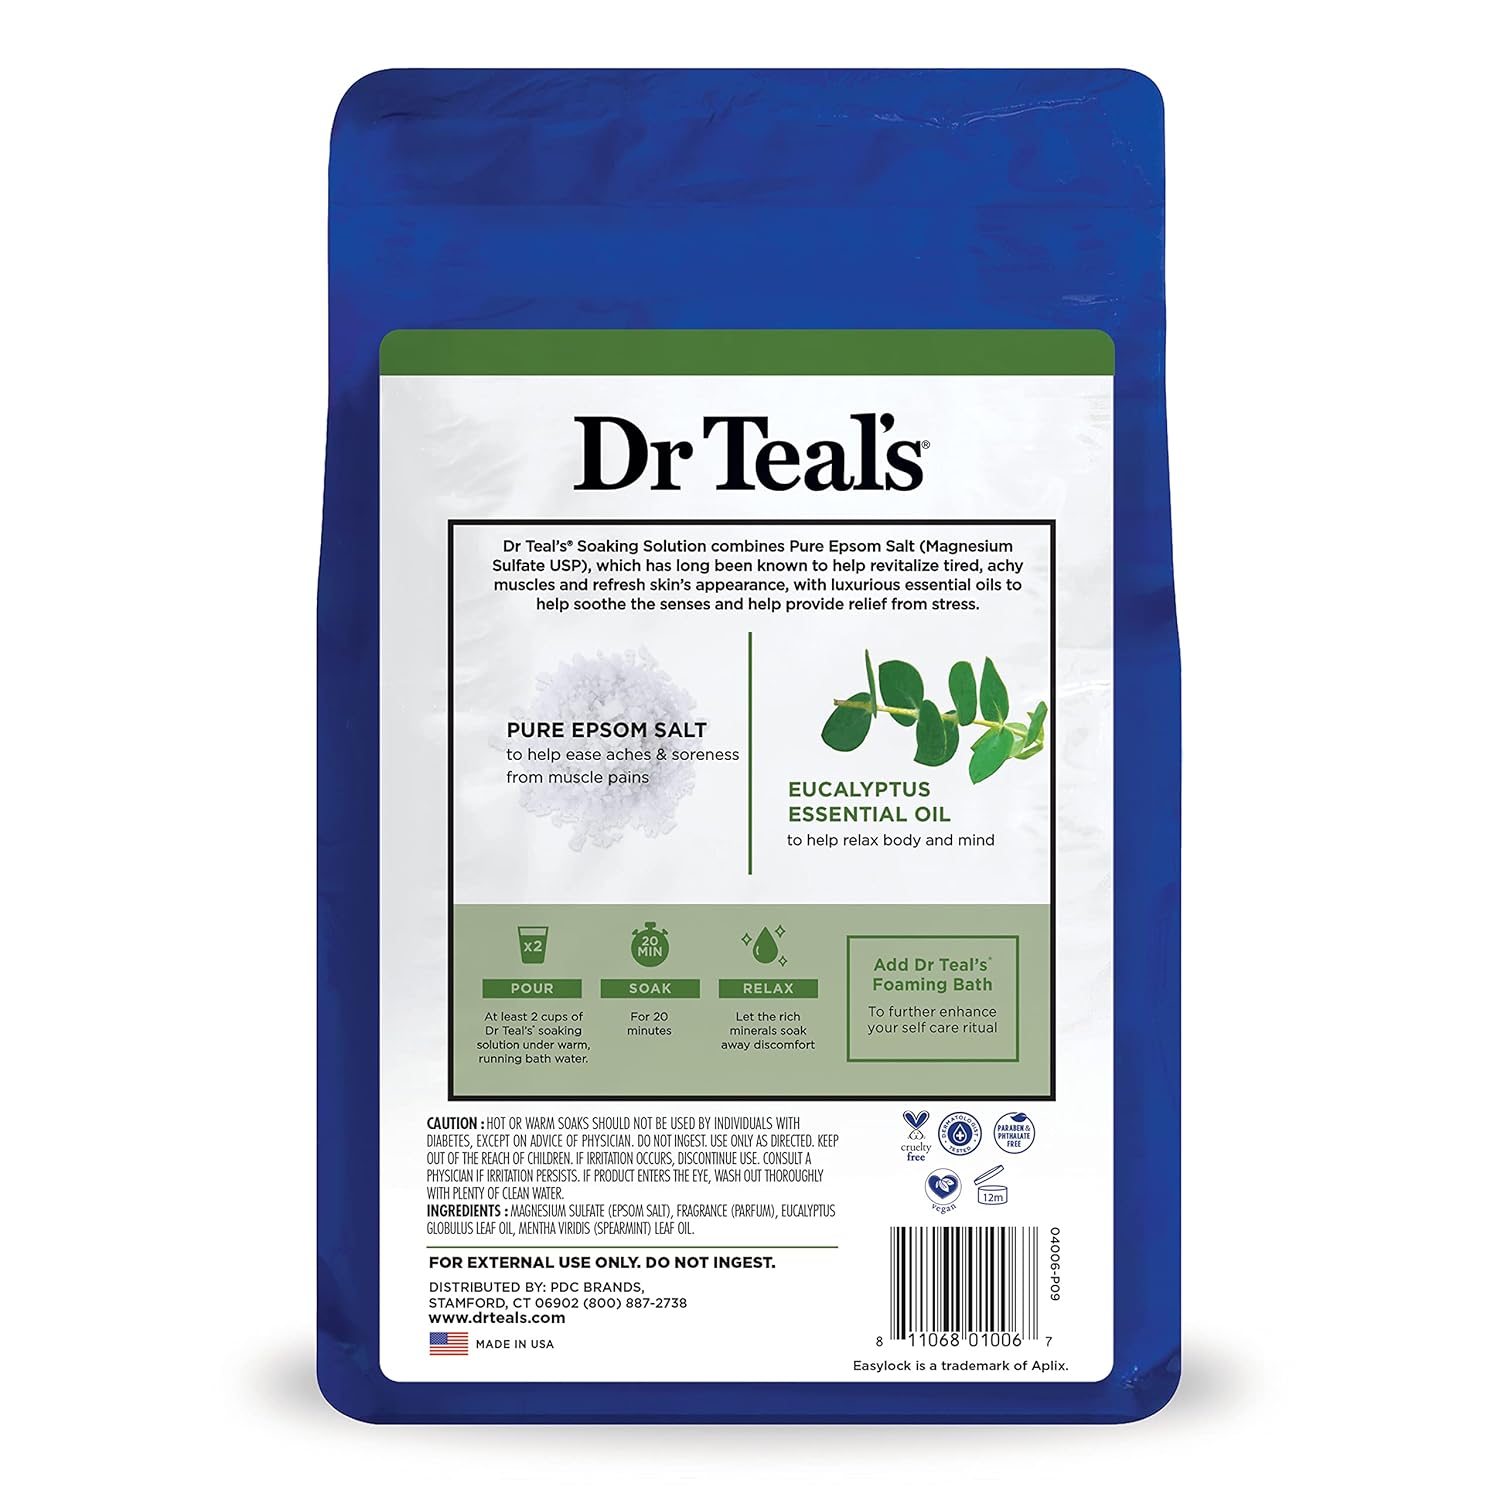 Dr Teal's Pure Epsom Salt Soak, Relax & Relief with Eucalyptus & Spearmint, 3lbs